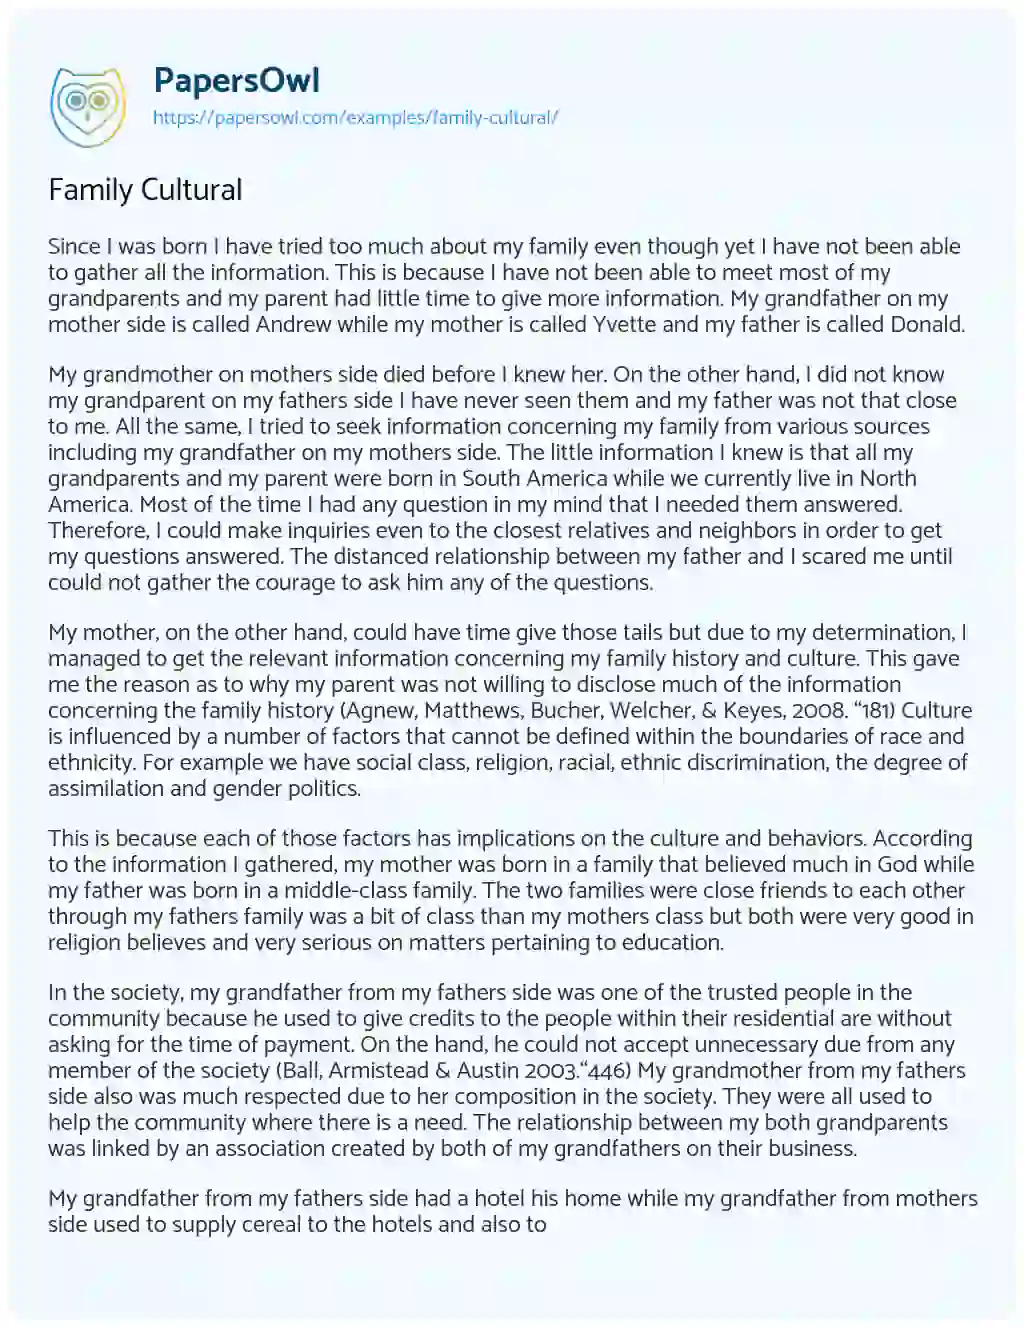 Family Cultural essay